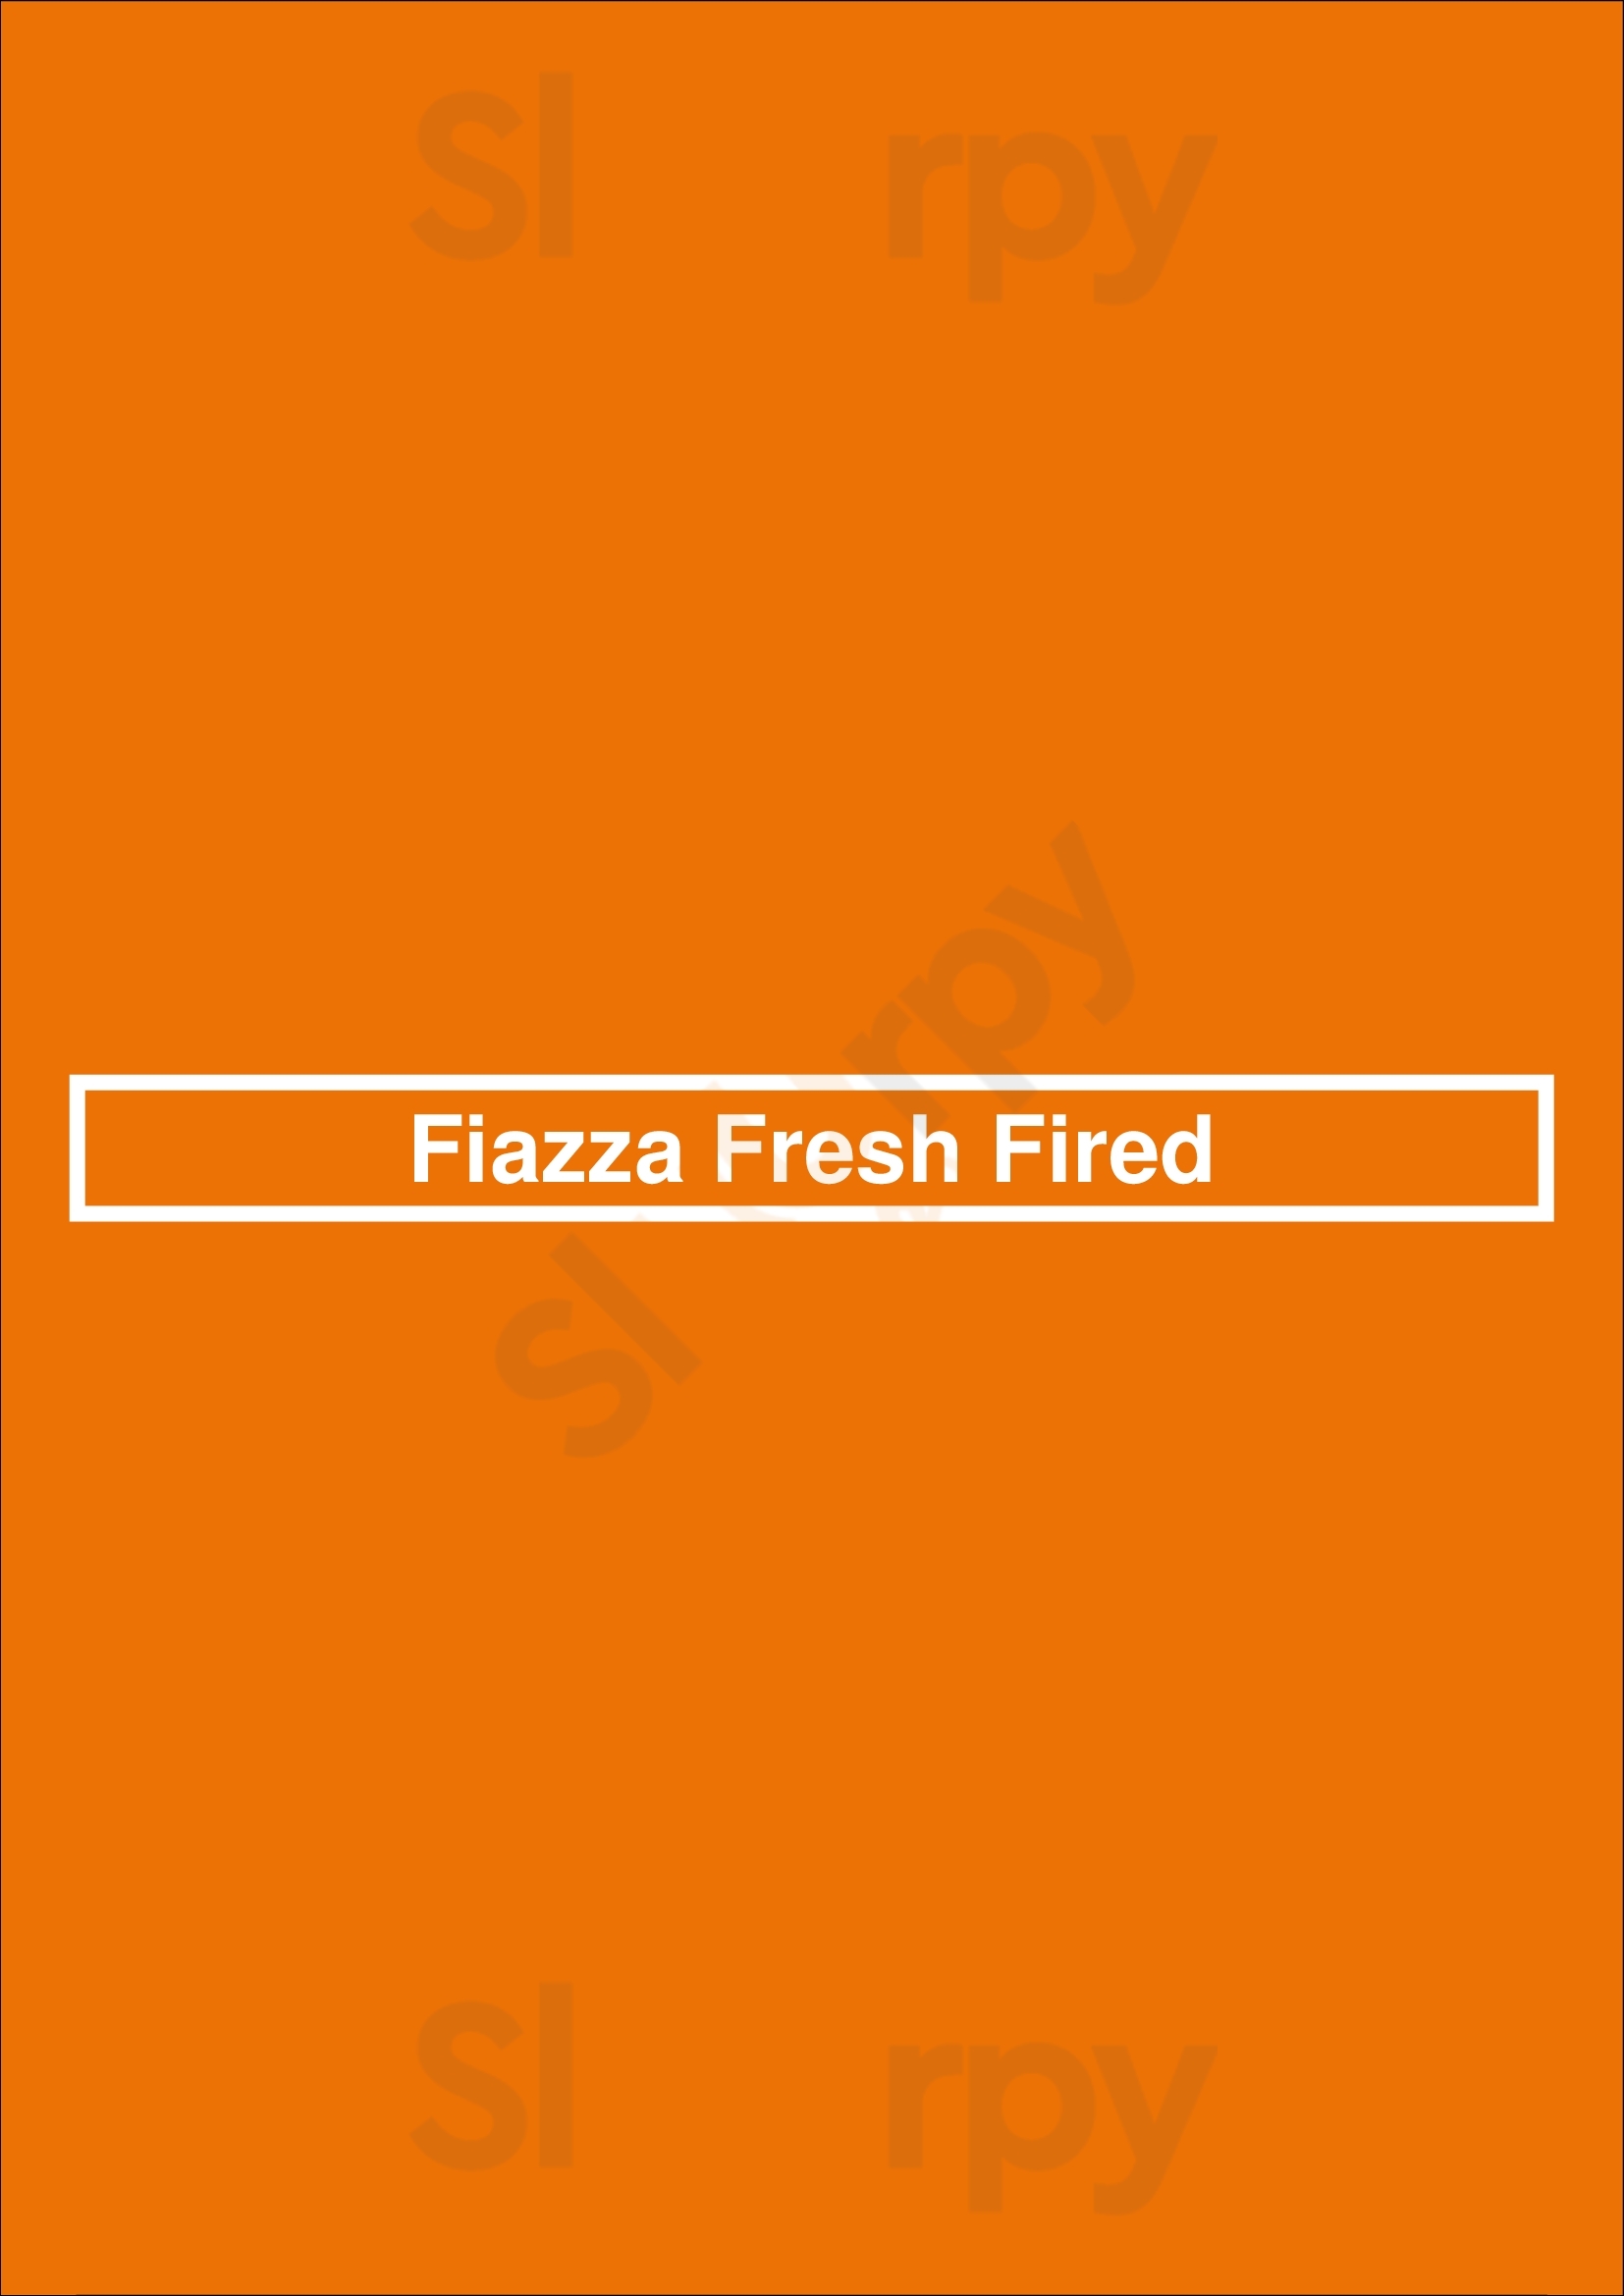 Fiazza Fresh Fired Ottawa Menu - 1